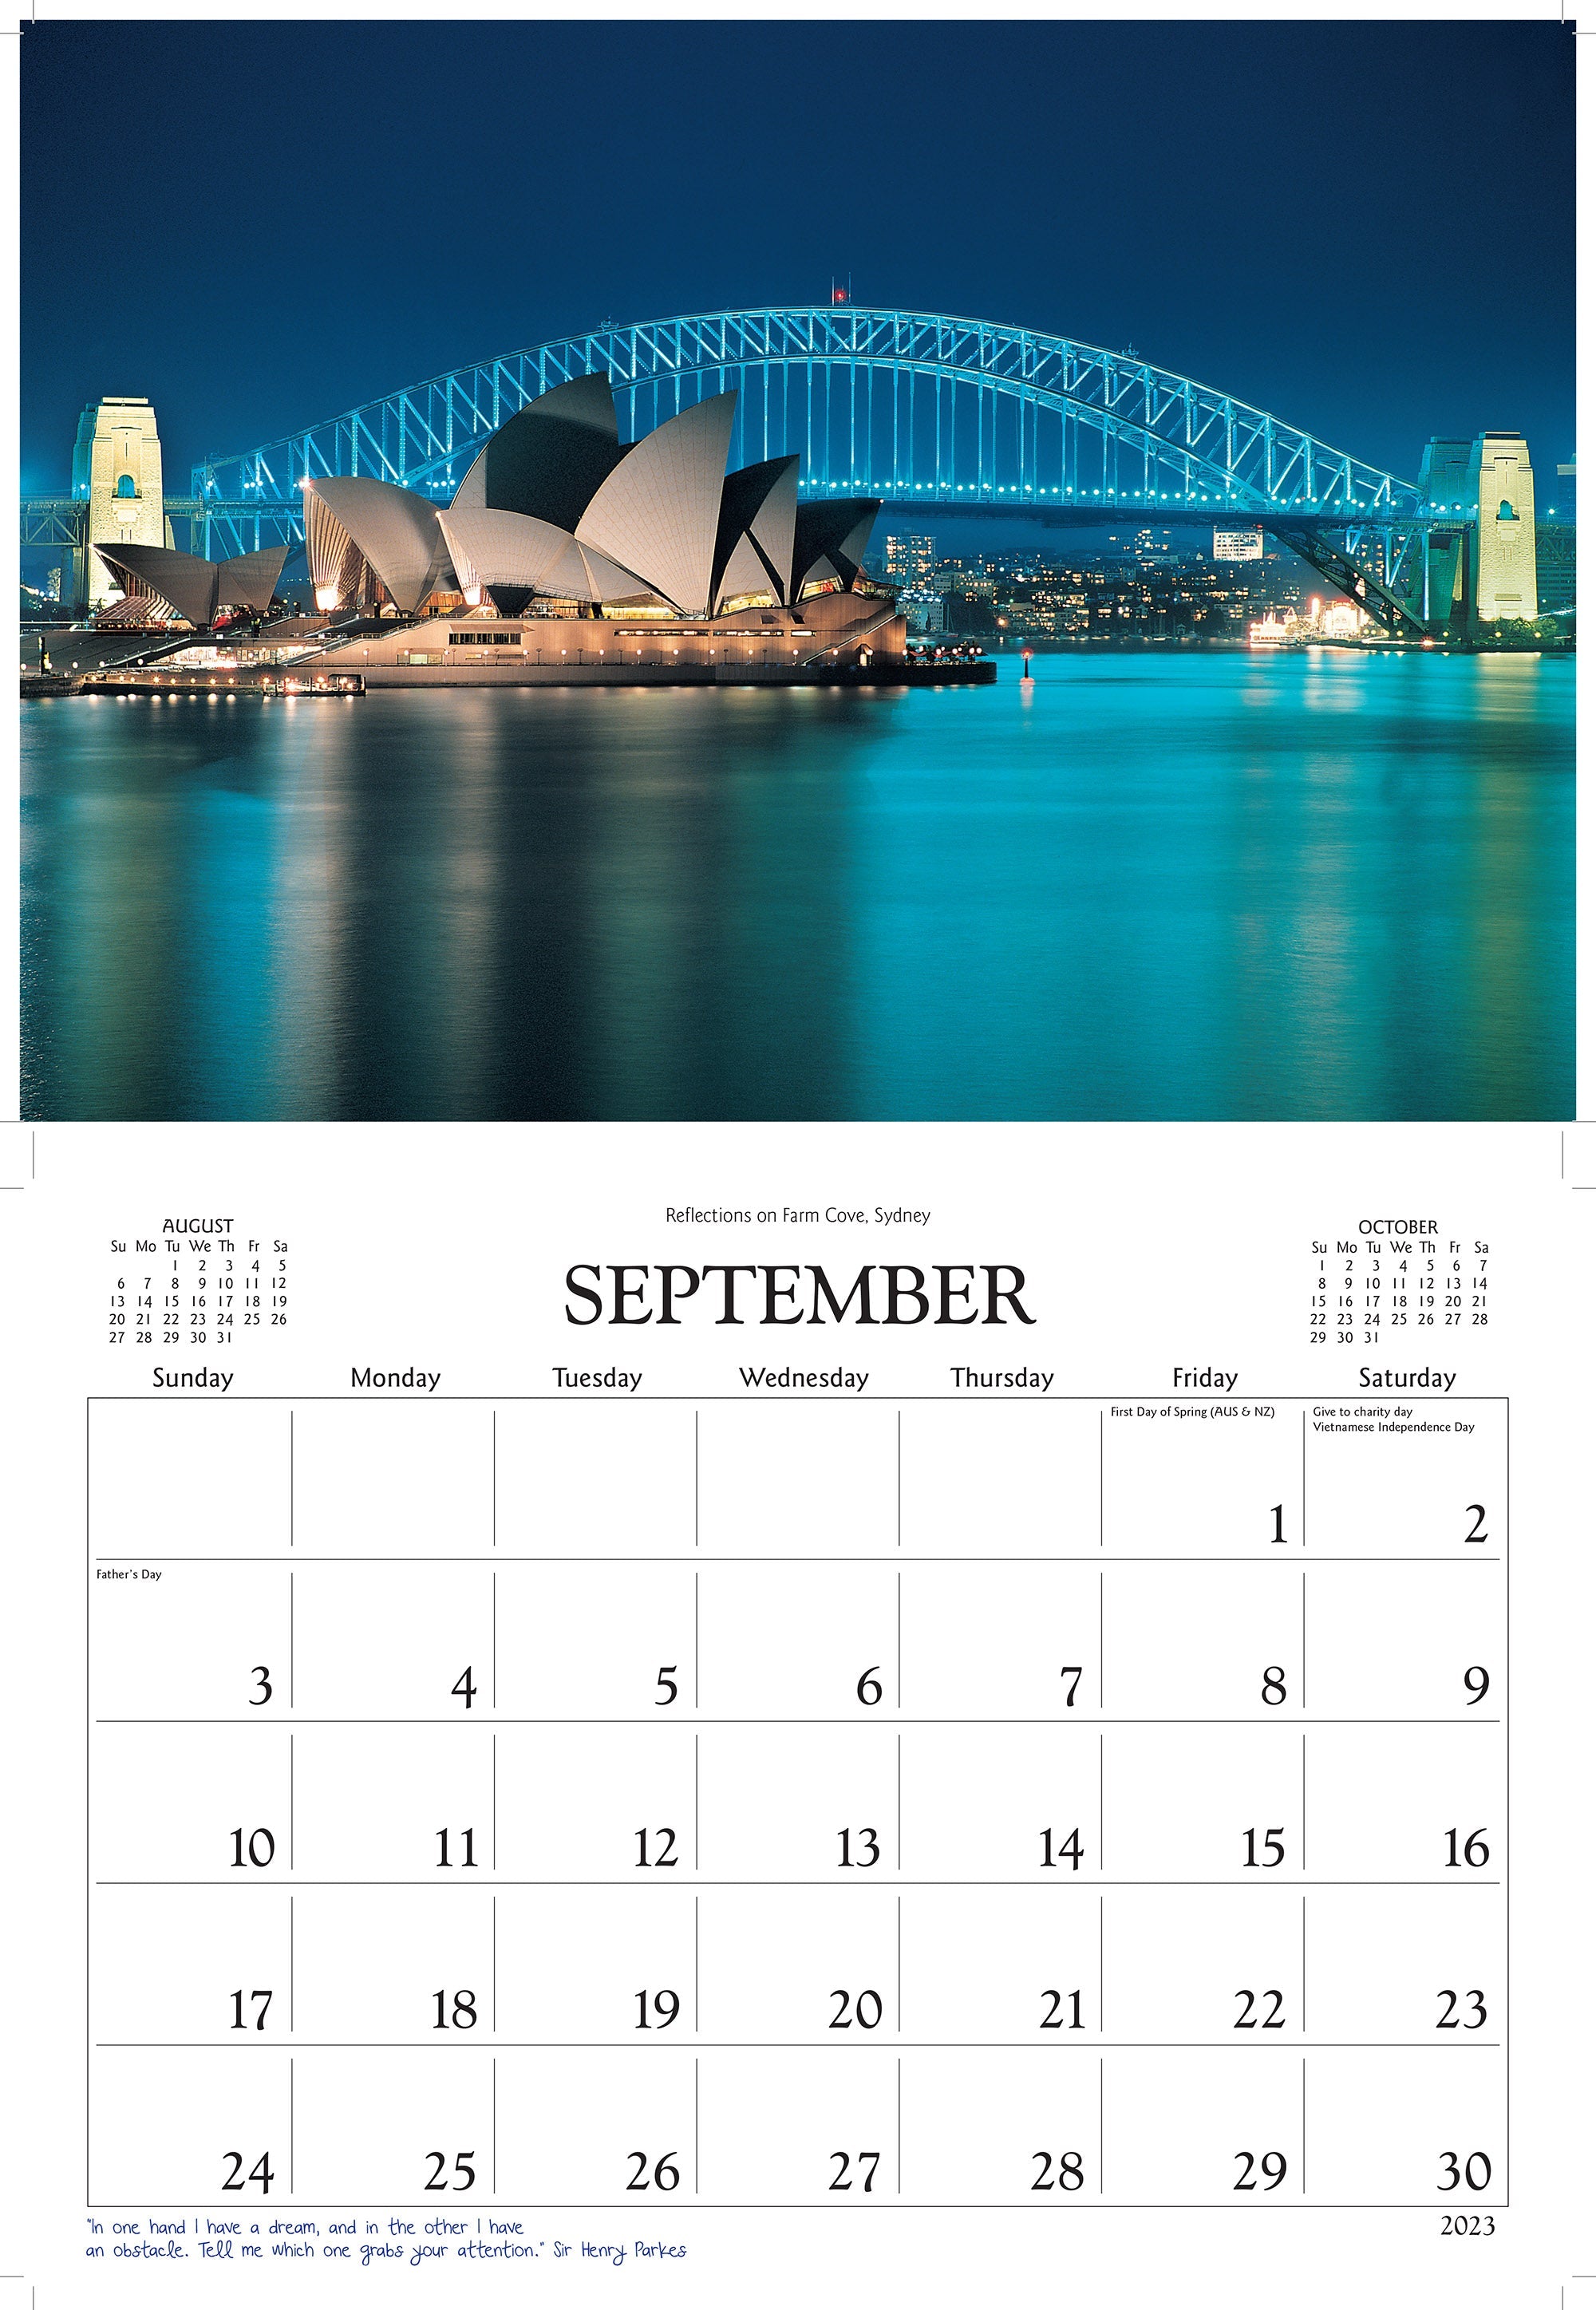 2023 Scenic Australia by David Messent - Horizontal Wall Calendar